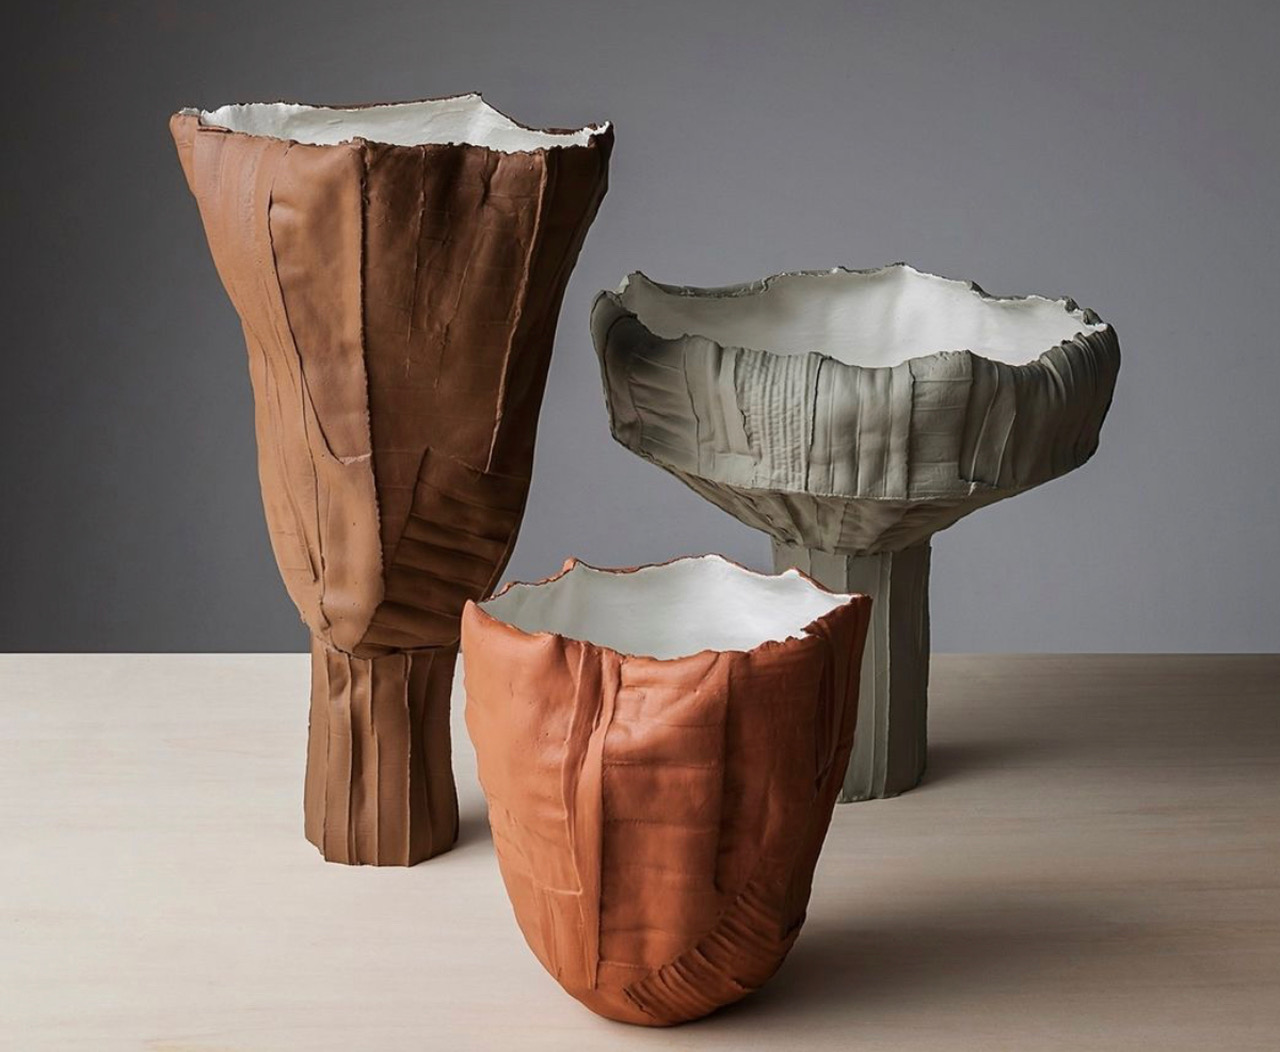 Paola Paronetto's Textured Ceramics Fuse Paper and Clay - Interior Design